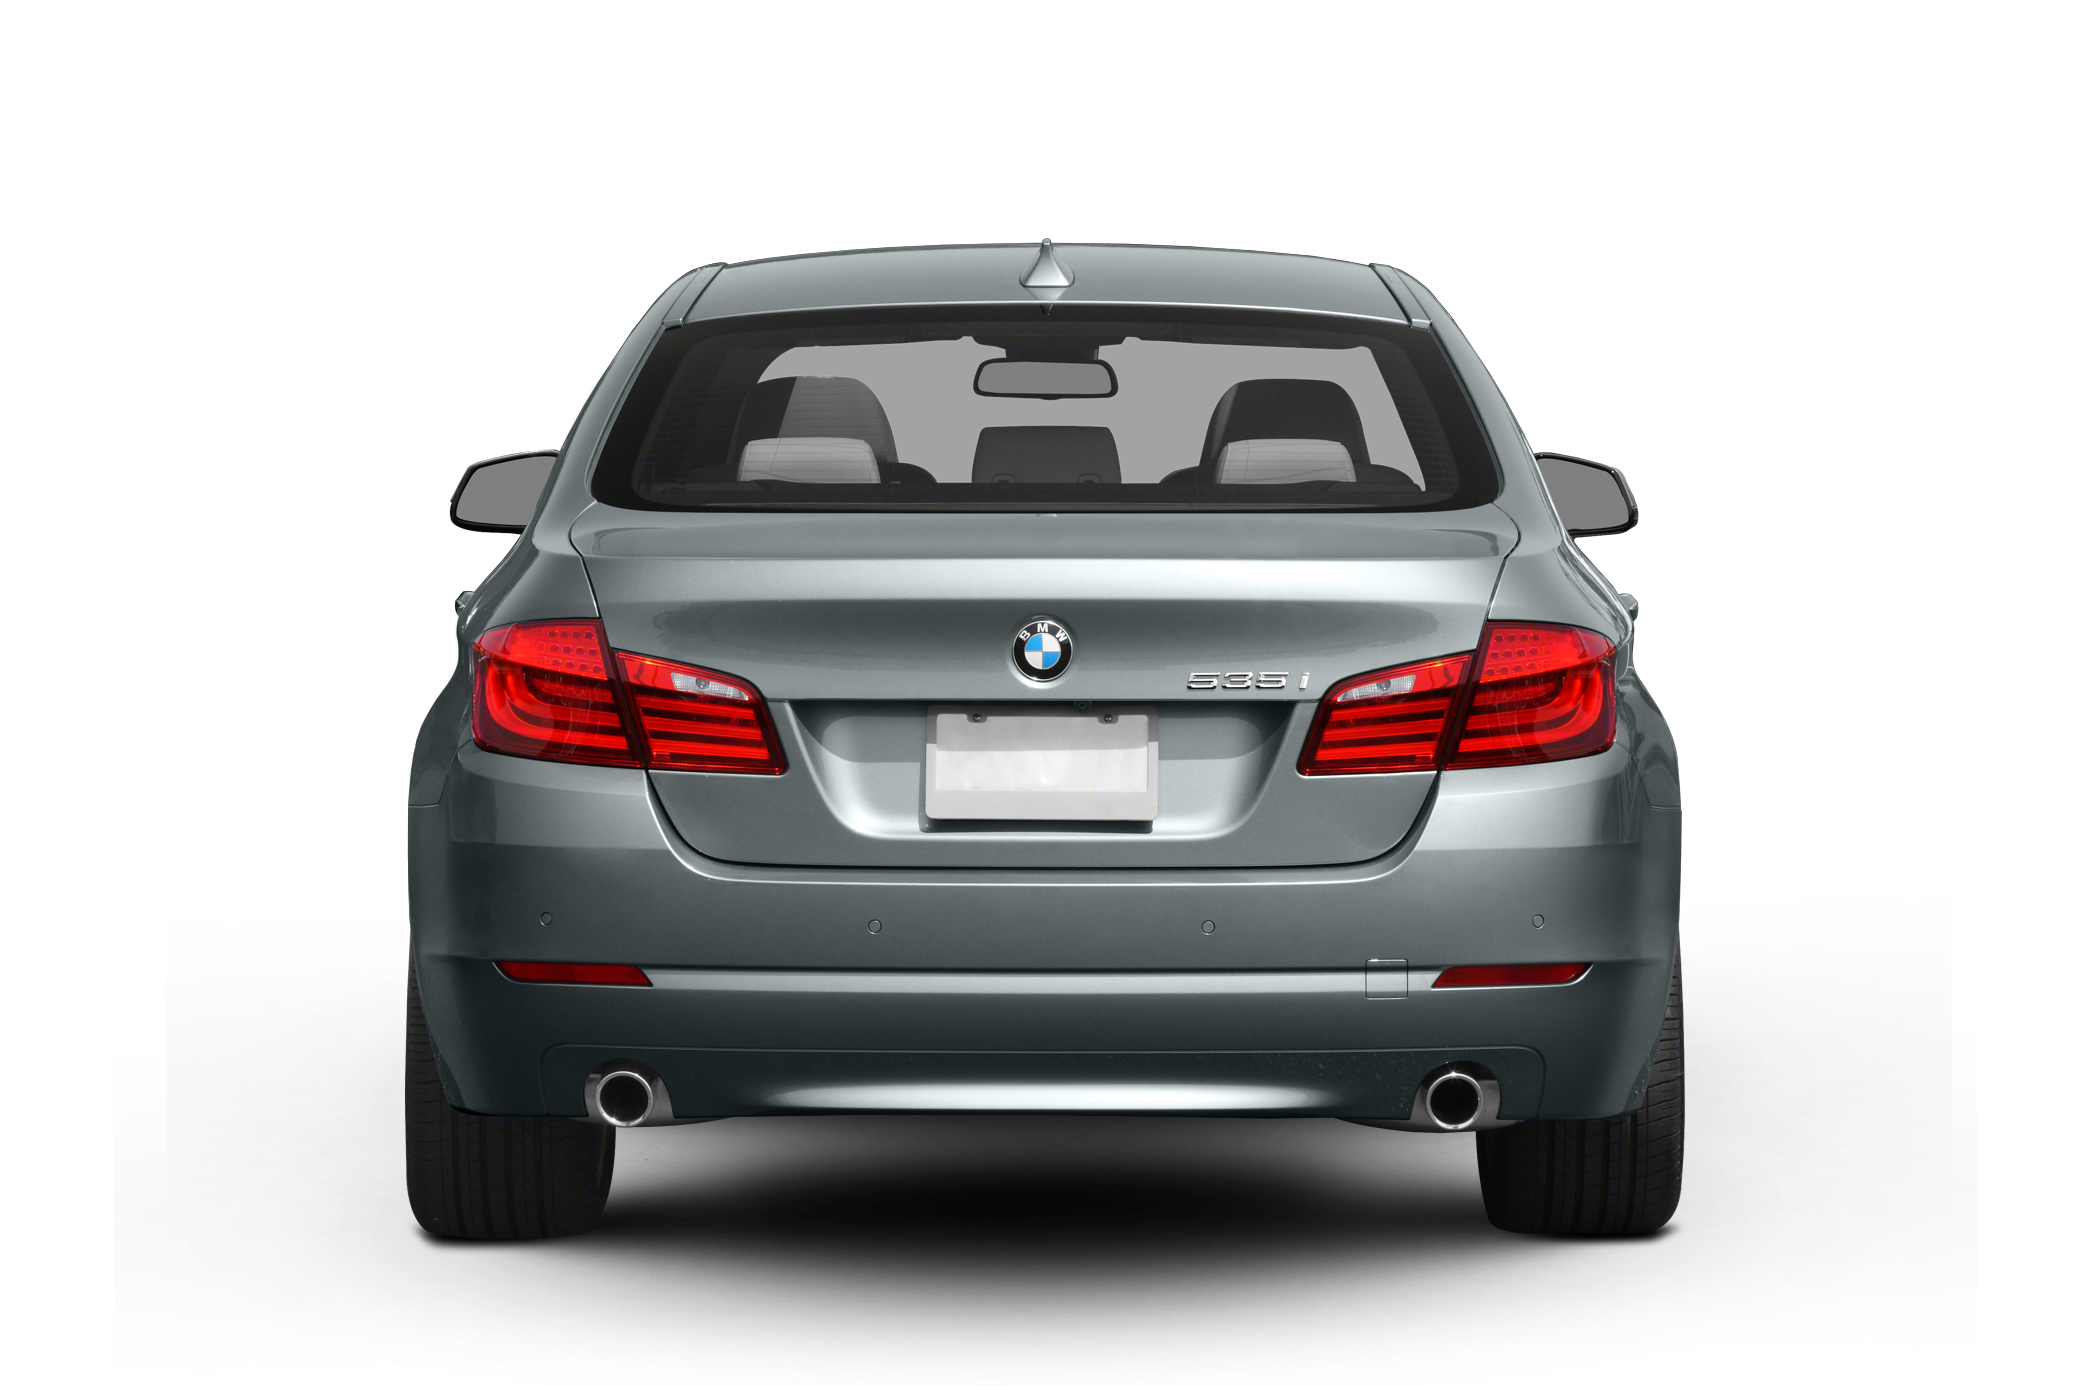 2012 BMW 535